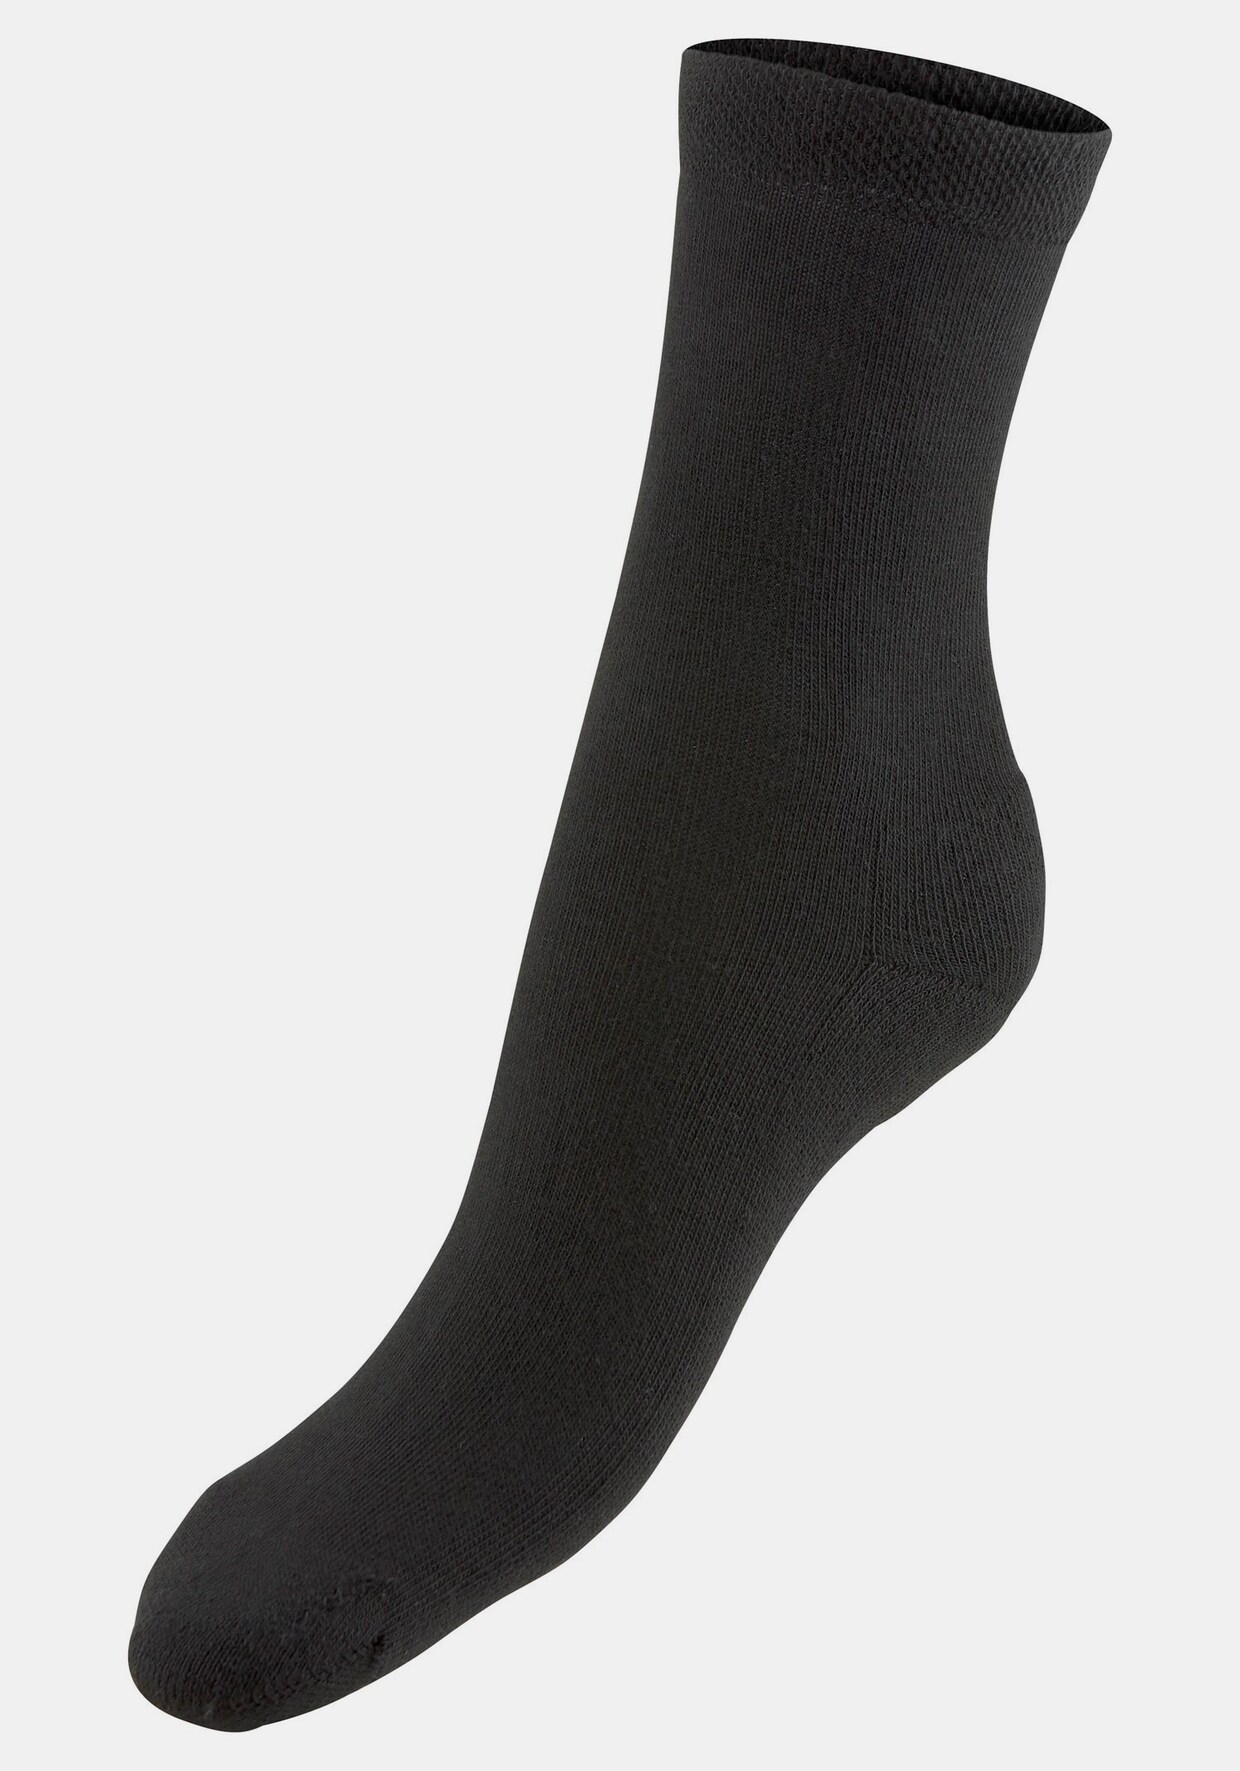 H.I.S Socken - 2x schwarz + 2x jeans-melange + 2x grau-melange